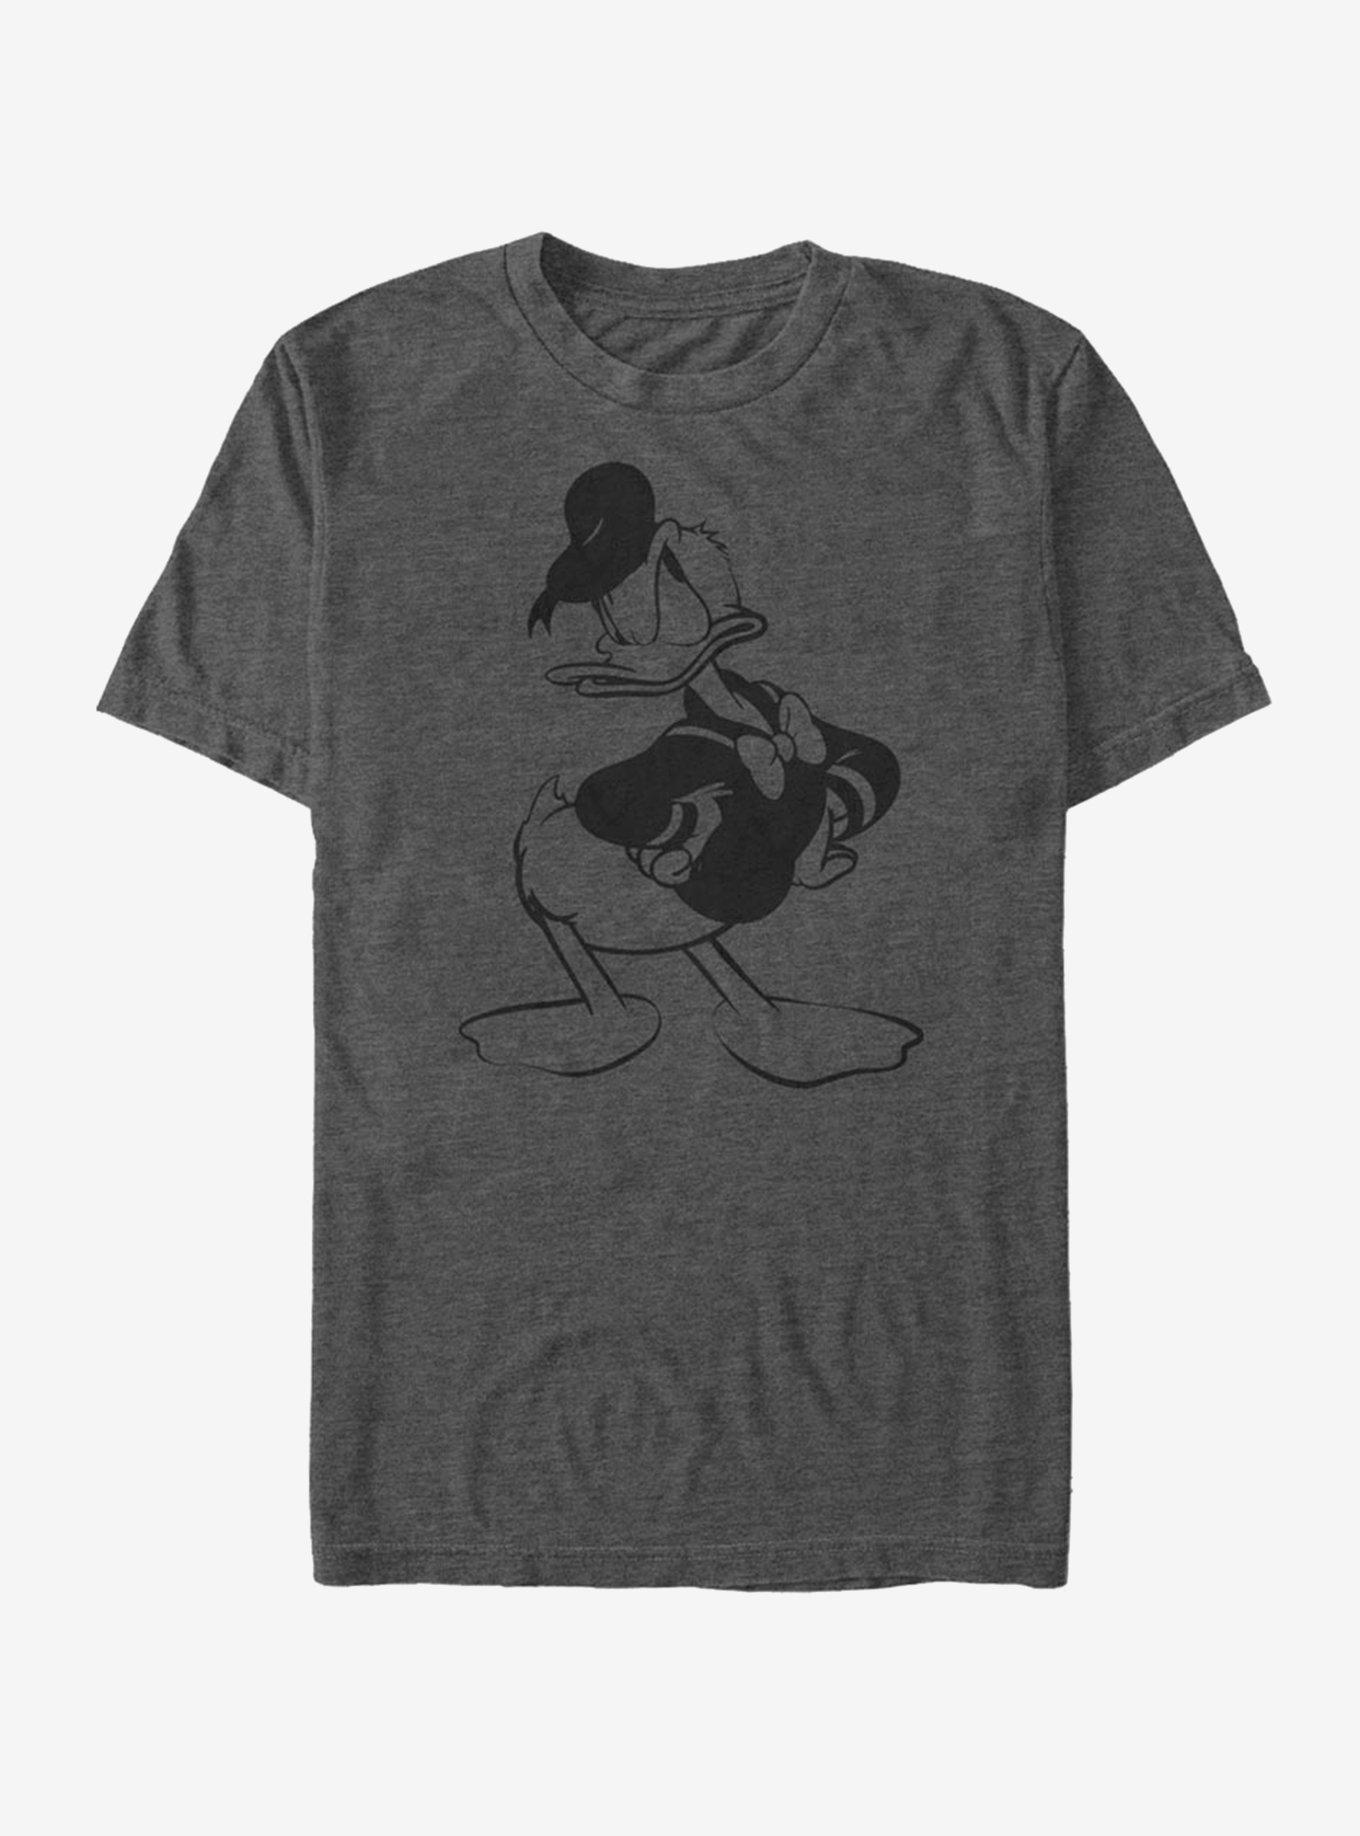 Disney Donald Duck Old Print Donald T-Shirt, CHARCOAL, hi-res